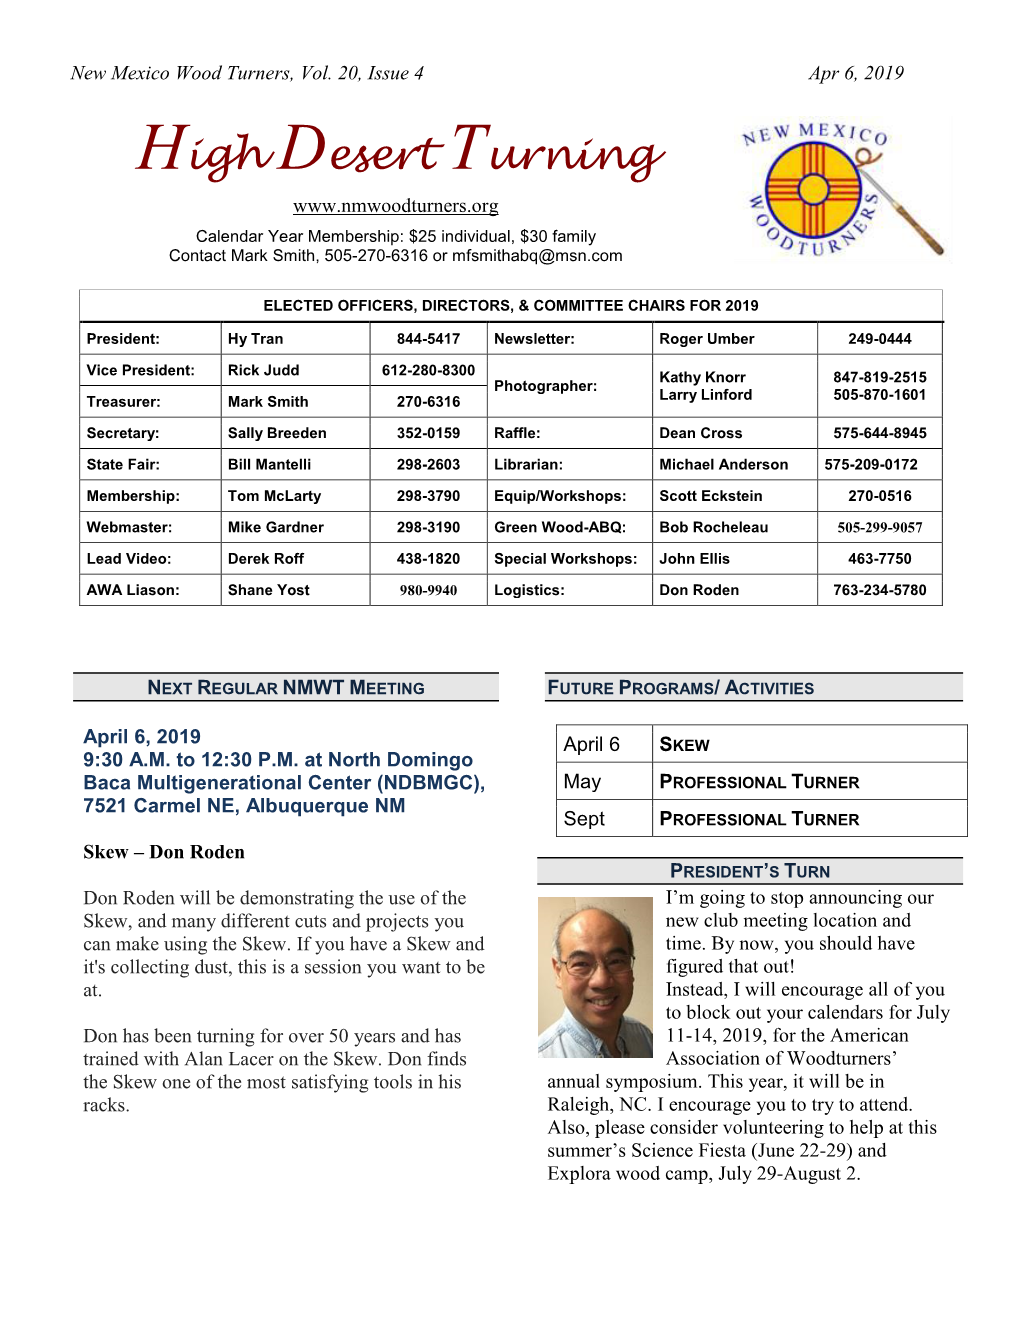 High Desert Turning Calendar Year Membership: $25 Individual, $30 Family Contact Mark Smith, 505-270-6316 Or Mfsmithabq@Msn.Com